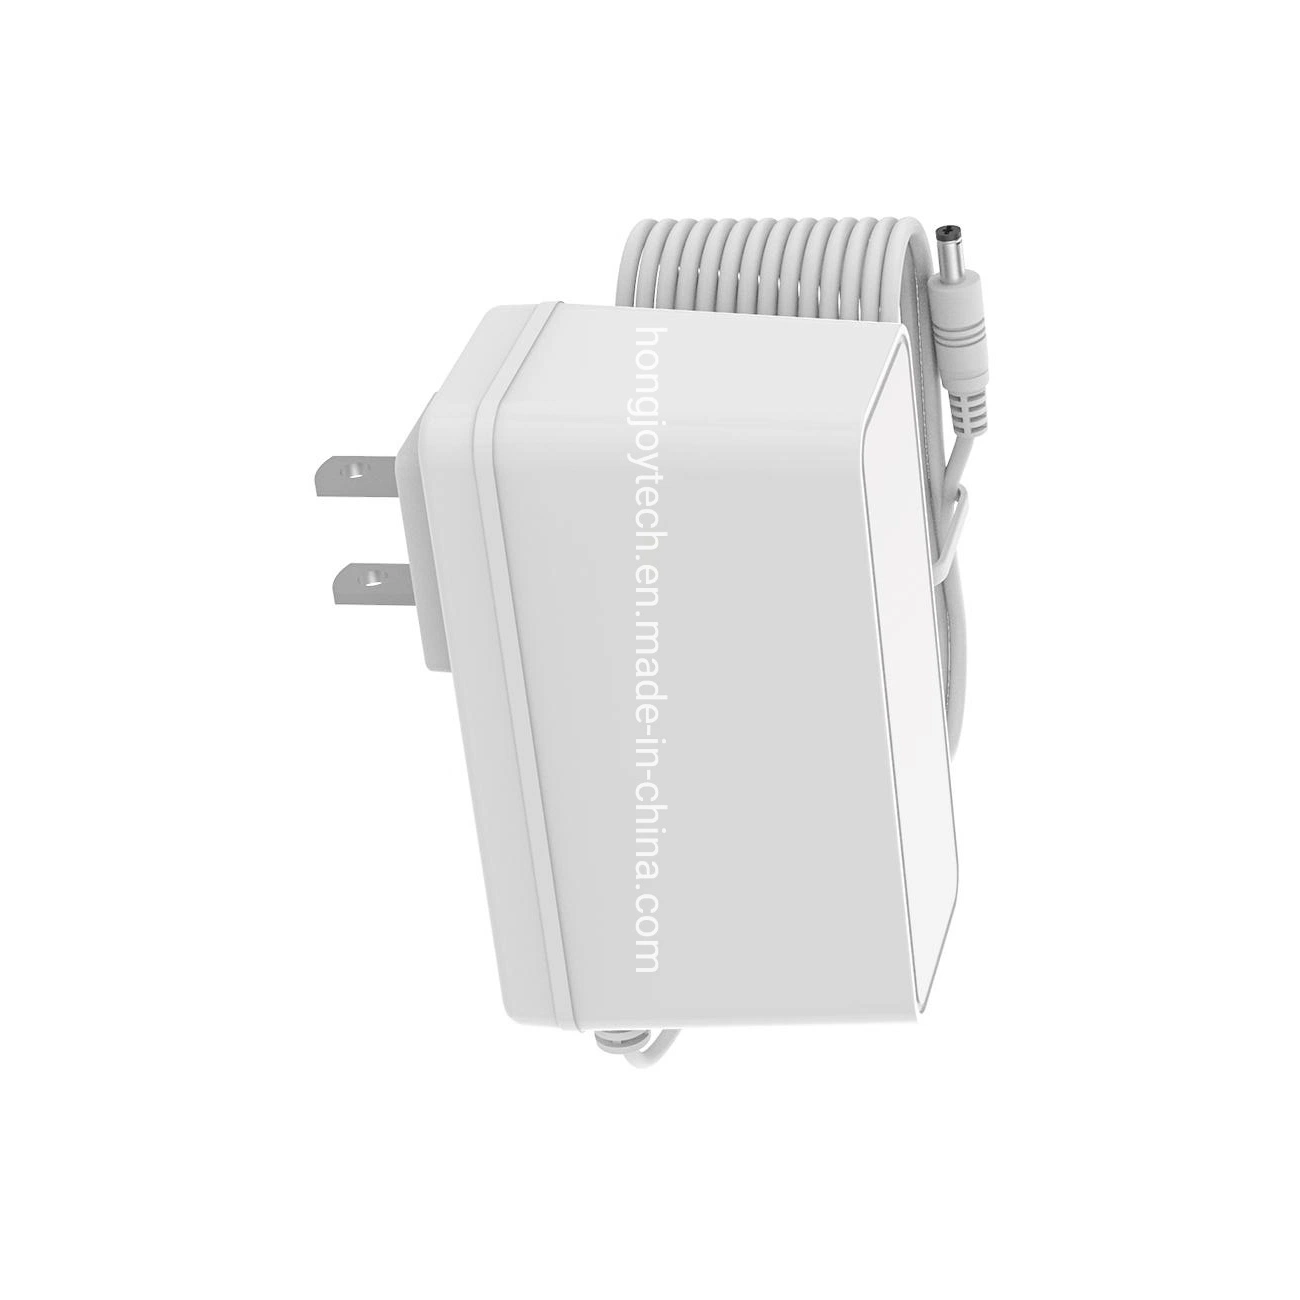 CCTV Camera LED Strip Light AC 100-240V Us Jp Plug DC 12V 2A 1A 0.5A 0.75A 1.25A 1.5A 1.2A Universal Switching Adapter Transformer 6V 24V 48V SMPS Power Supply